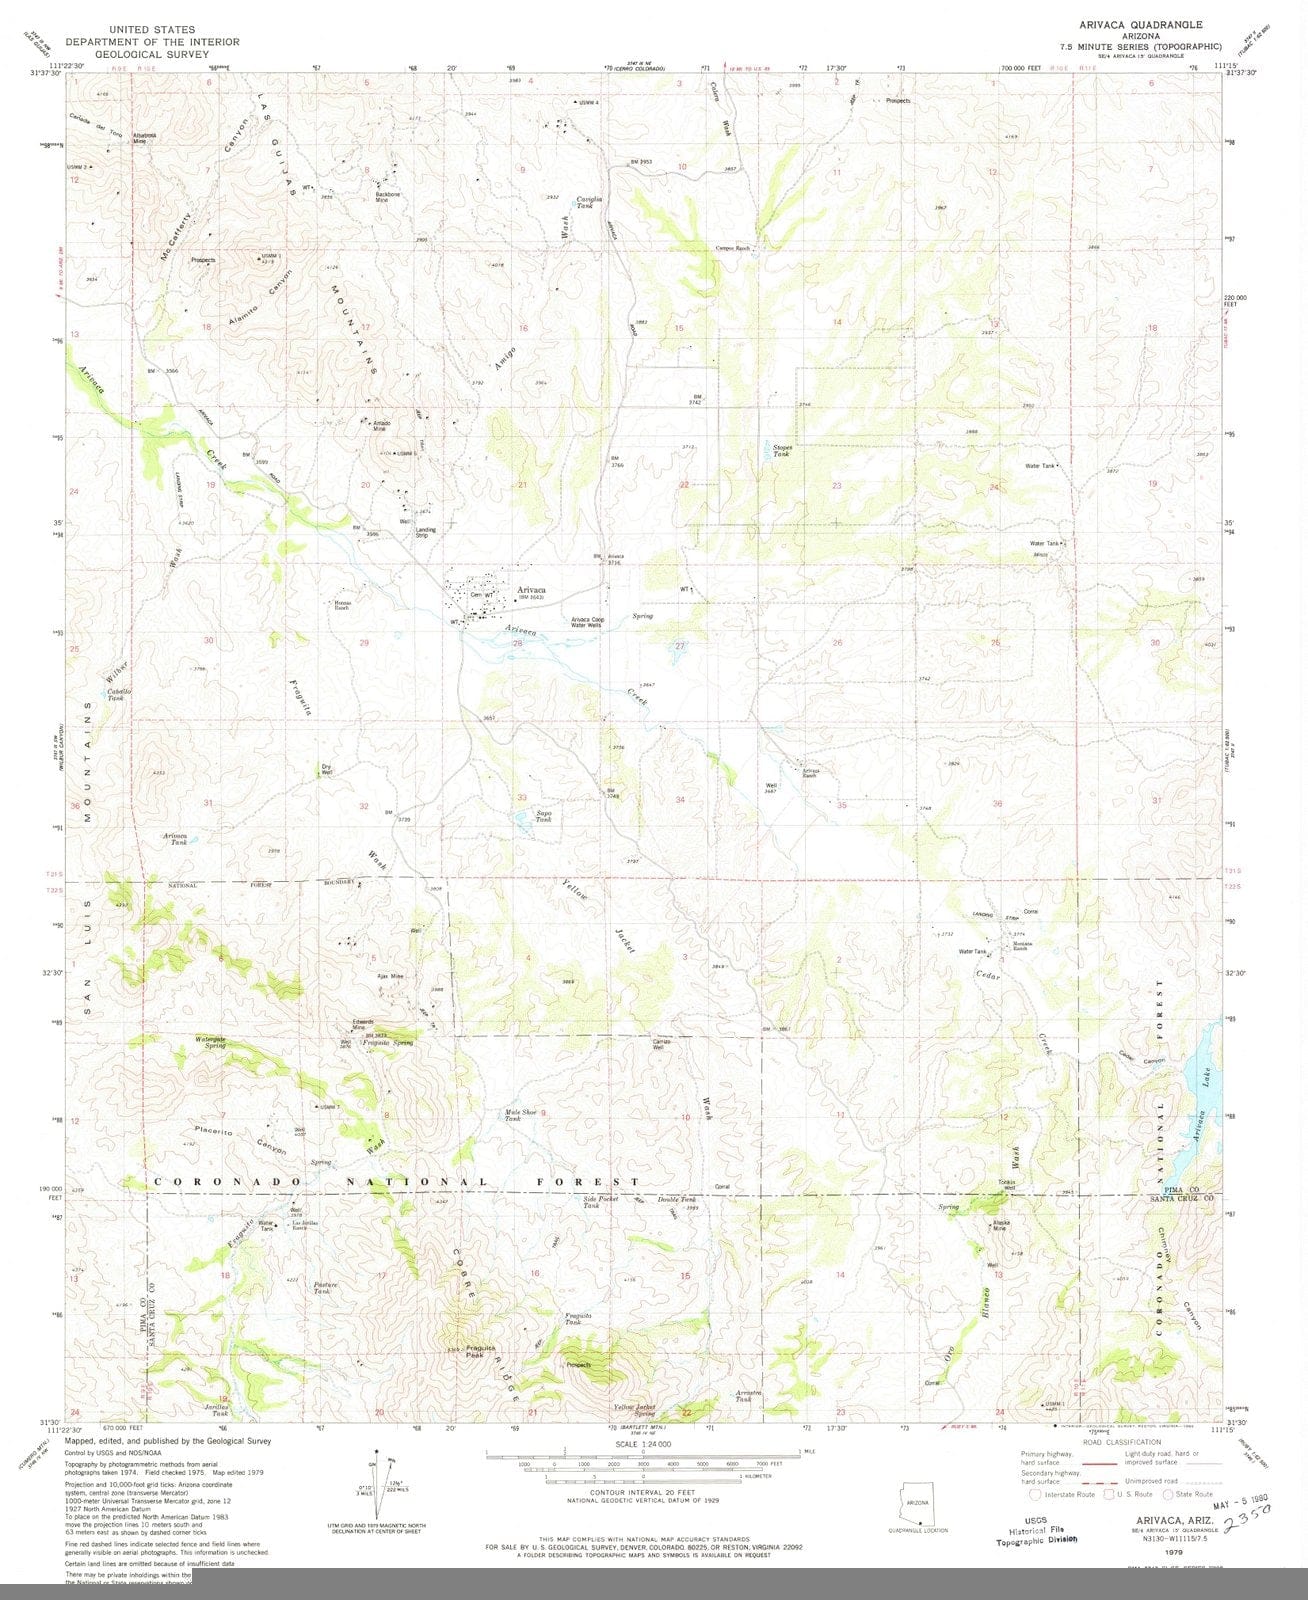 1979 Arivaca, AZ - Arizona - USGS Topographic Map